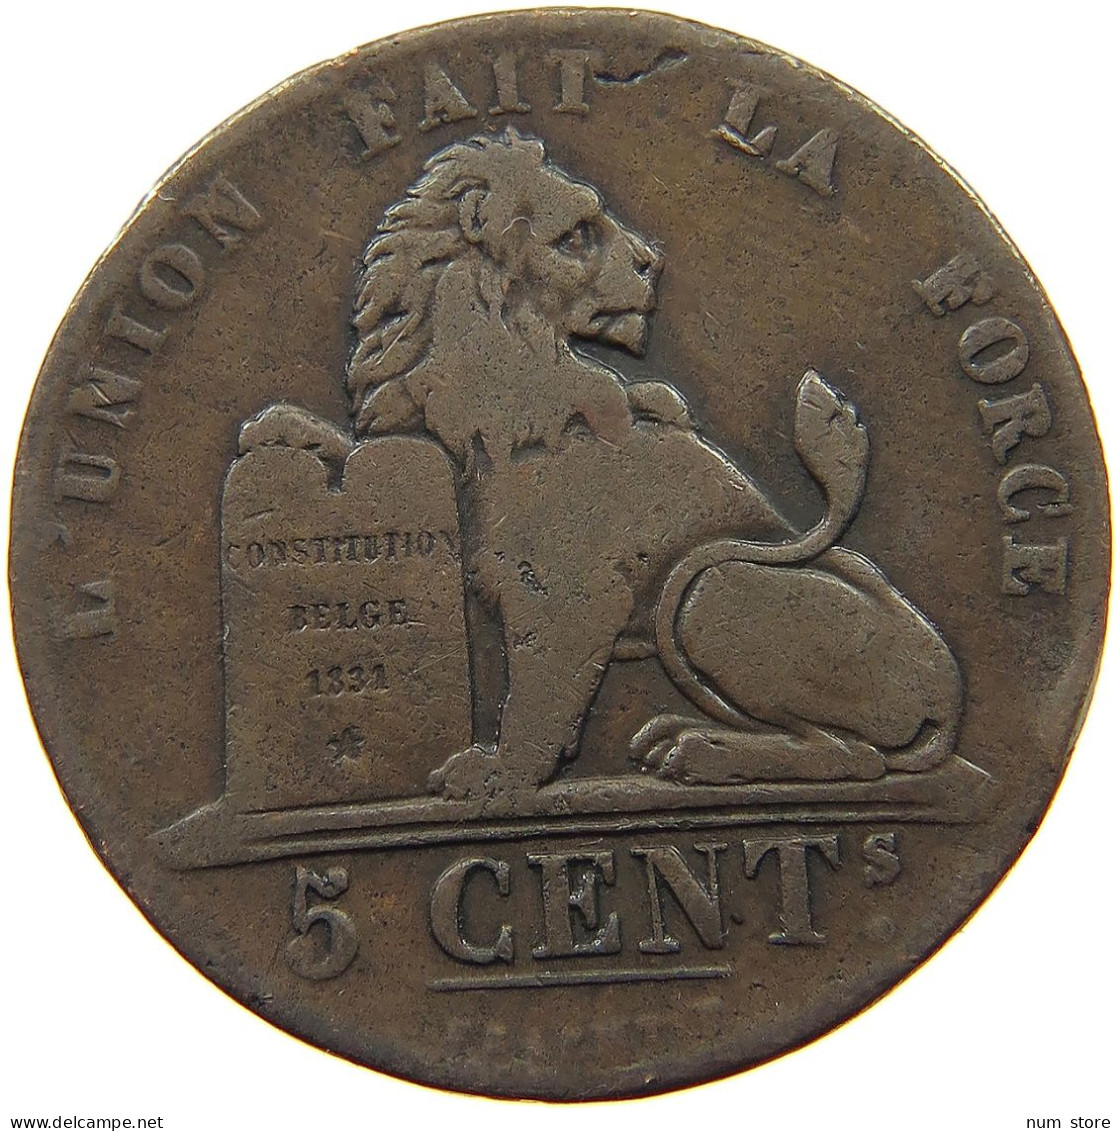 BELGIUM 5 CENTIMES 1842 Leopold I. (1831-1865) #a007 0323 - 5 Centimes